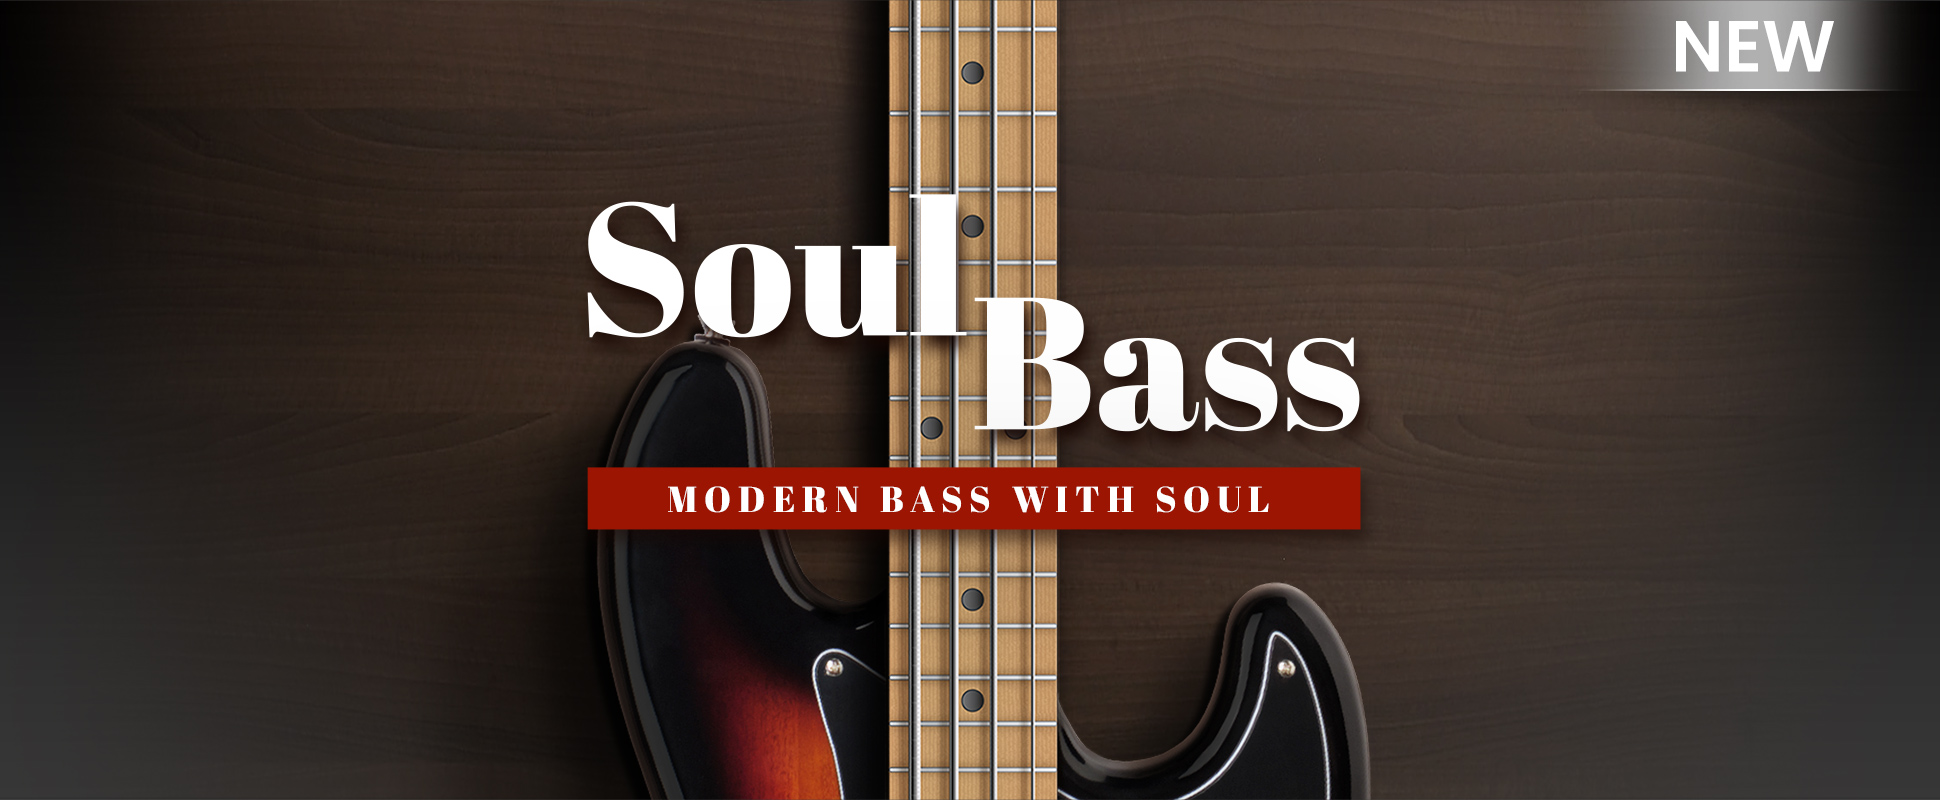 Soul Bass - New